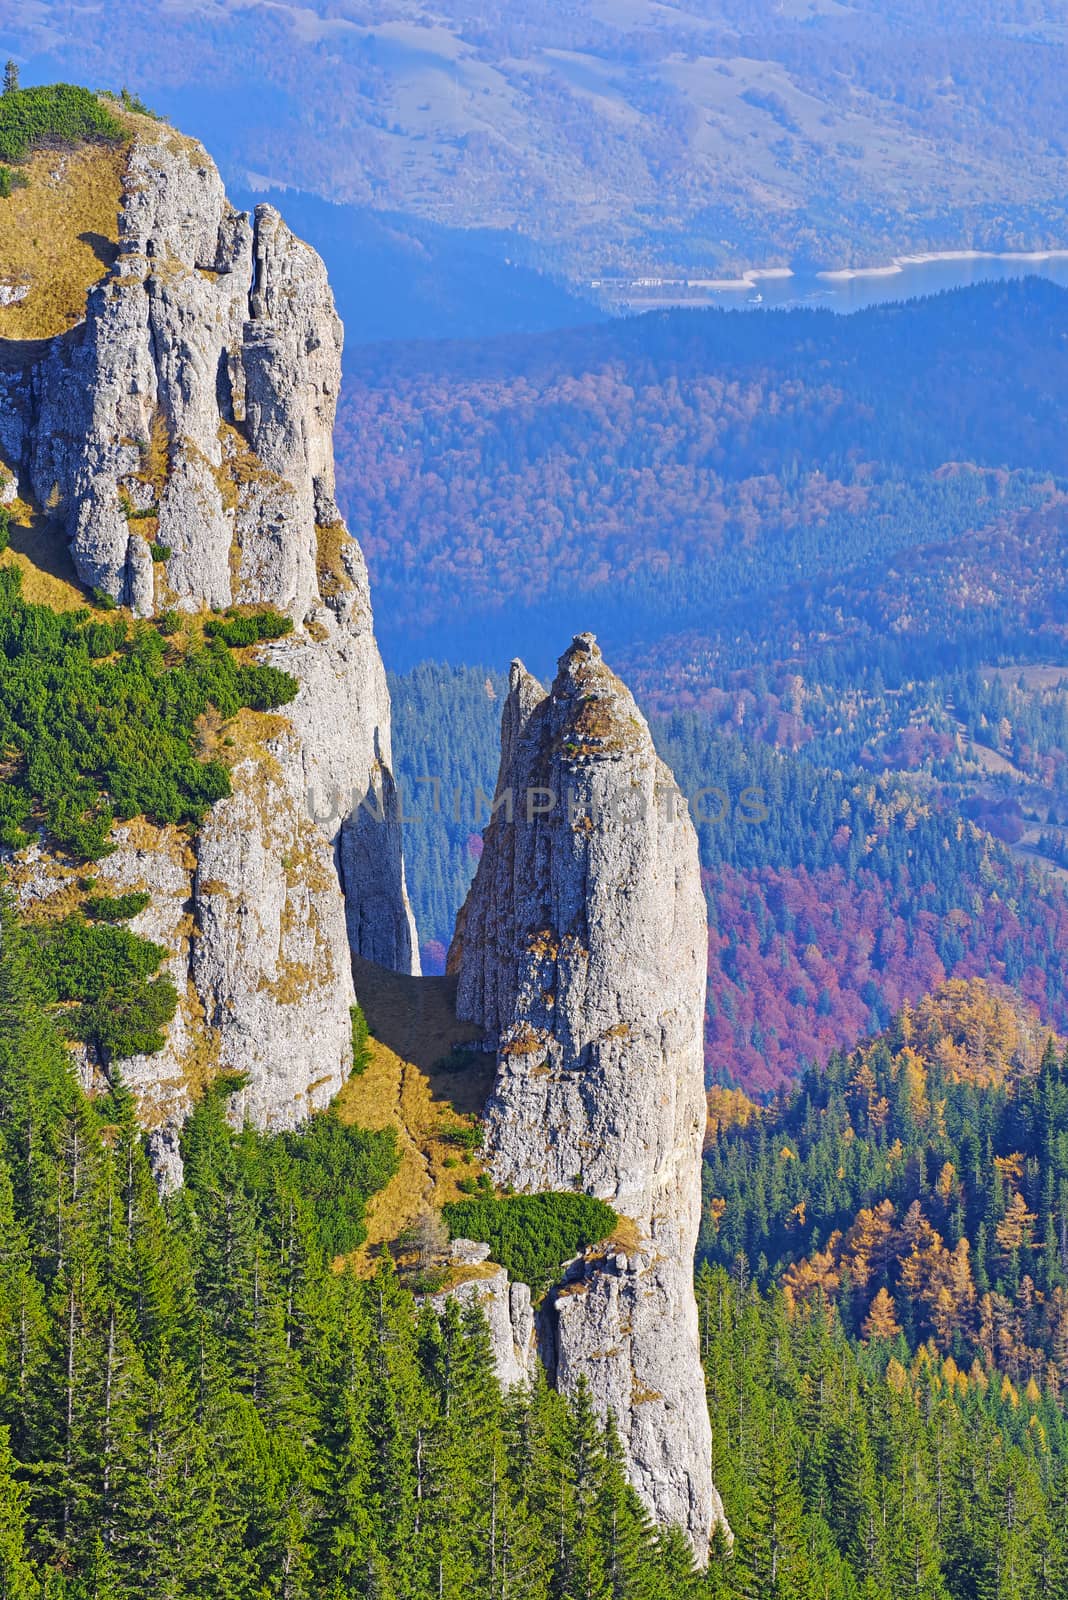 Autumn mountain rocks in mountain scene, forest background